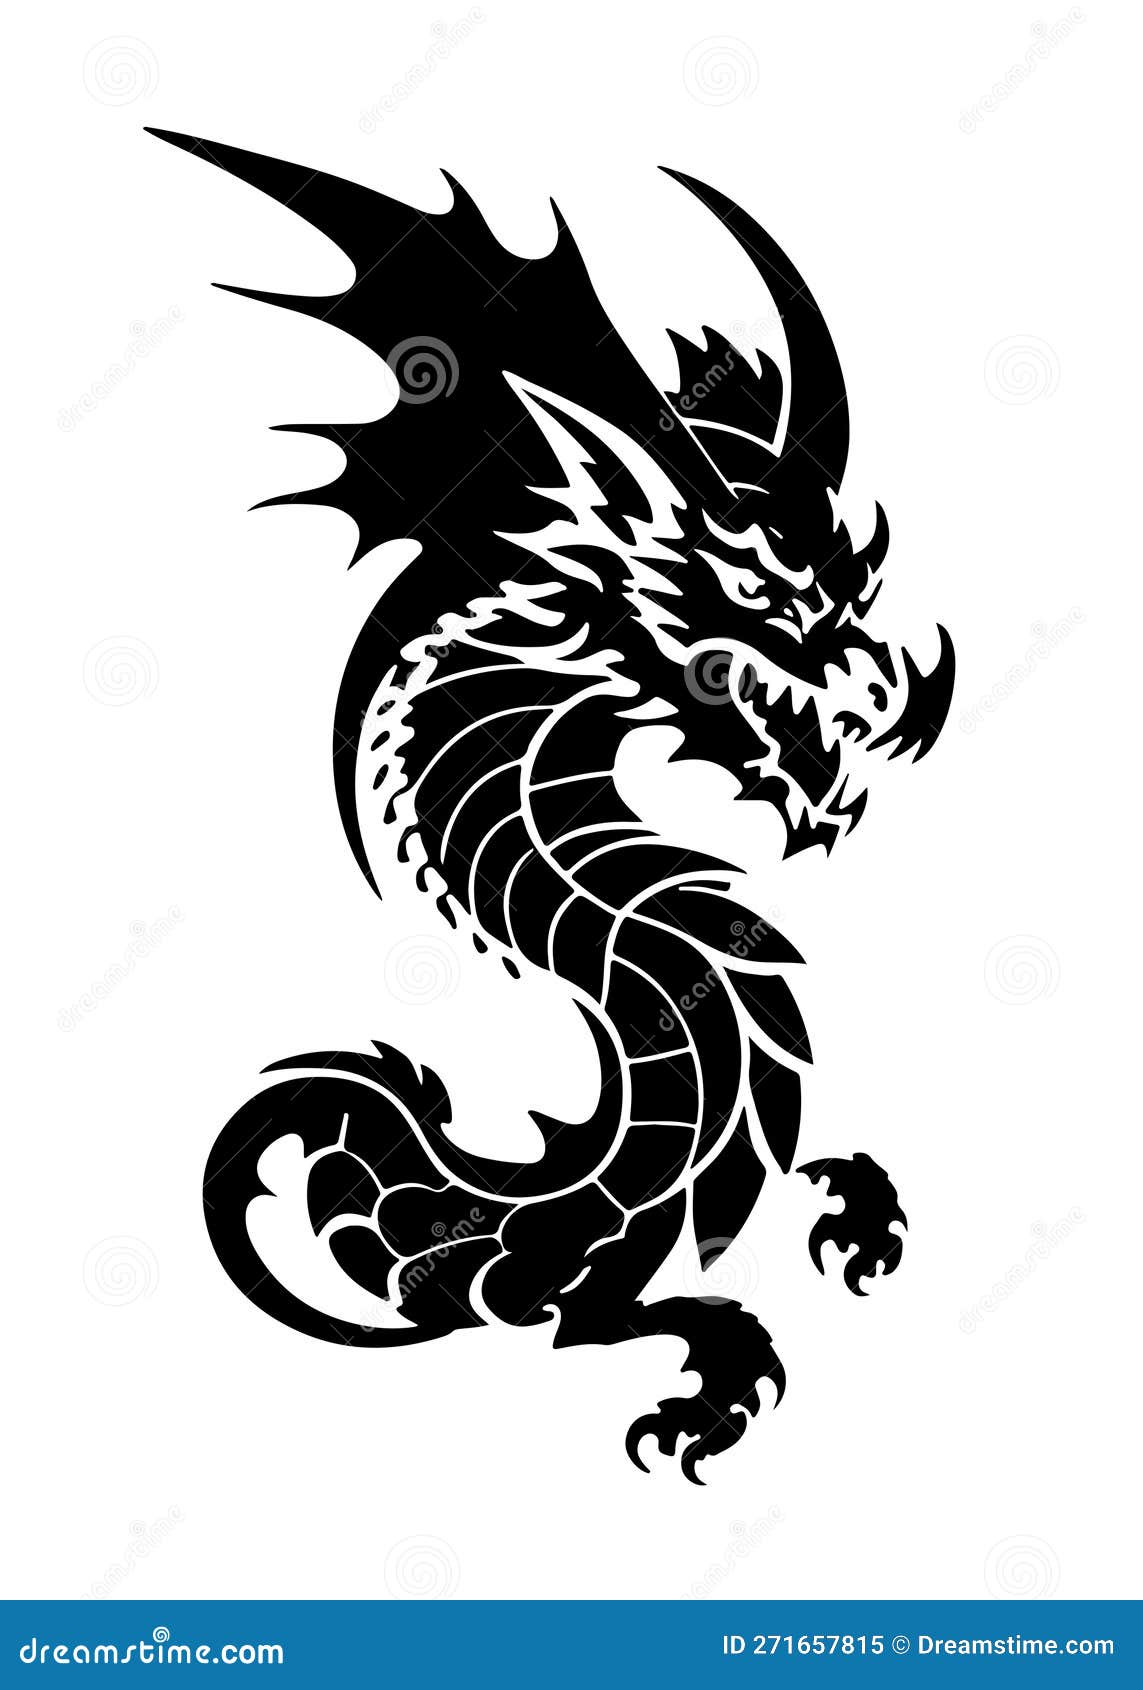 latest dragon tattoo designs - Clip Art Library